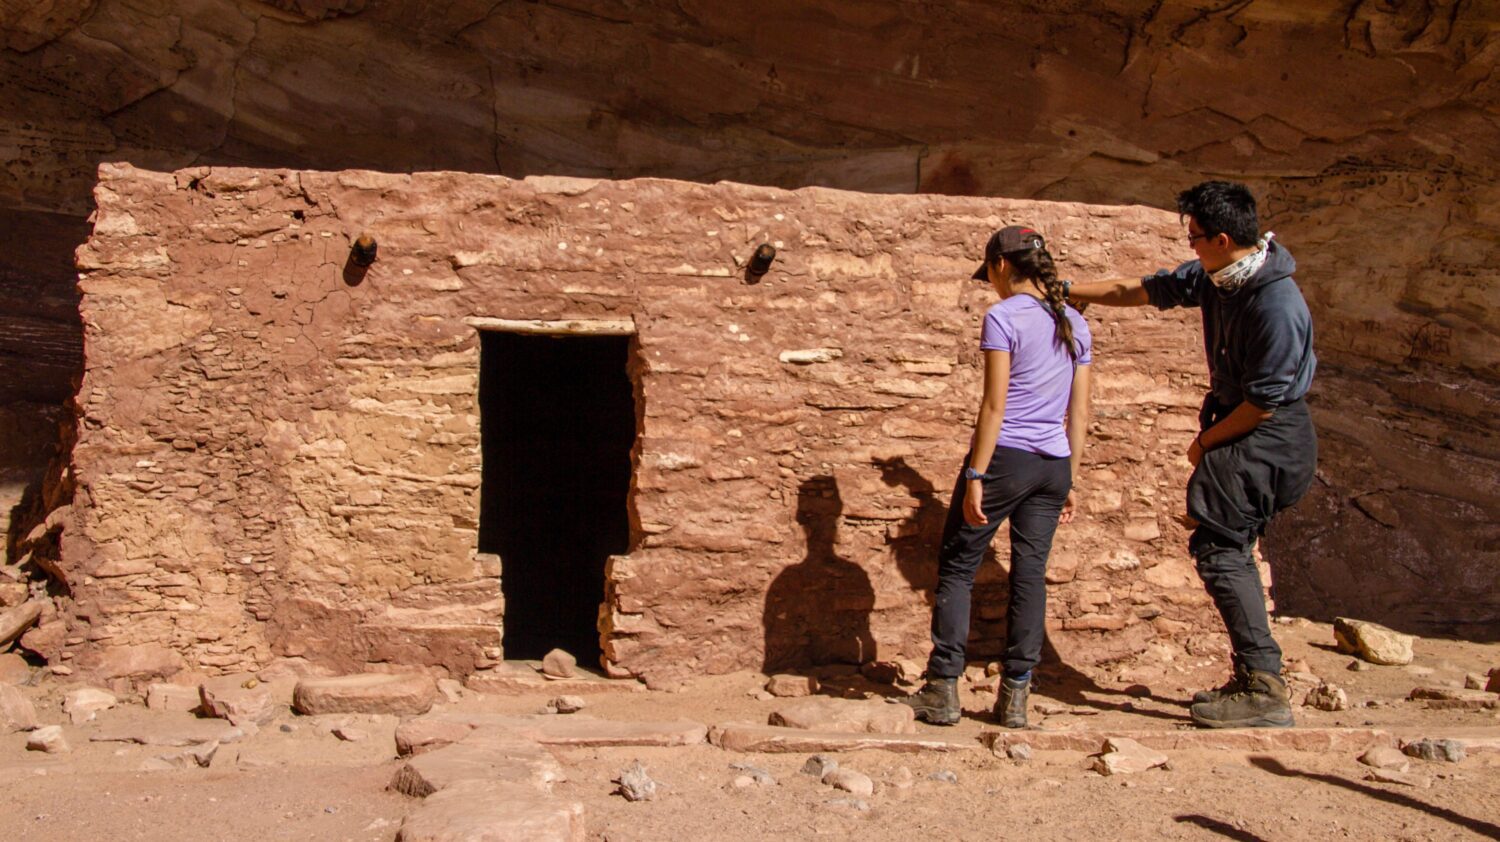 Marvel at the impressively preserved ancestral puebloan ruins in Southeastern Utah